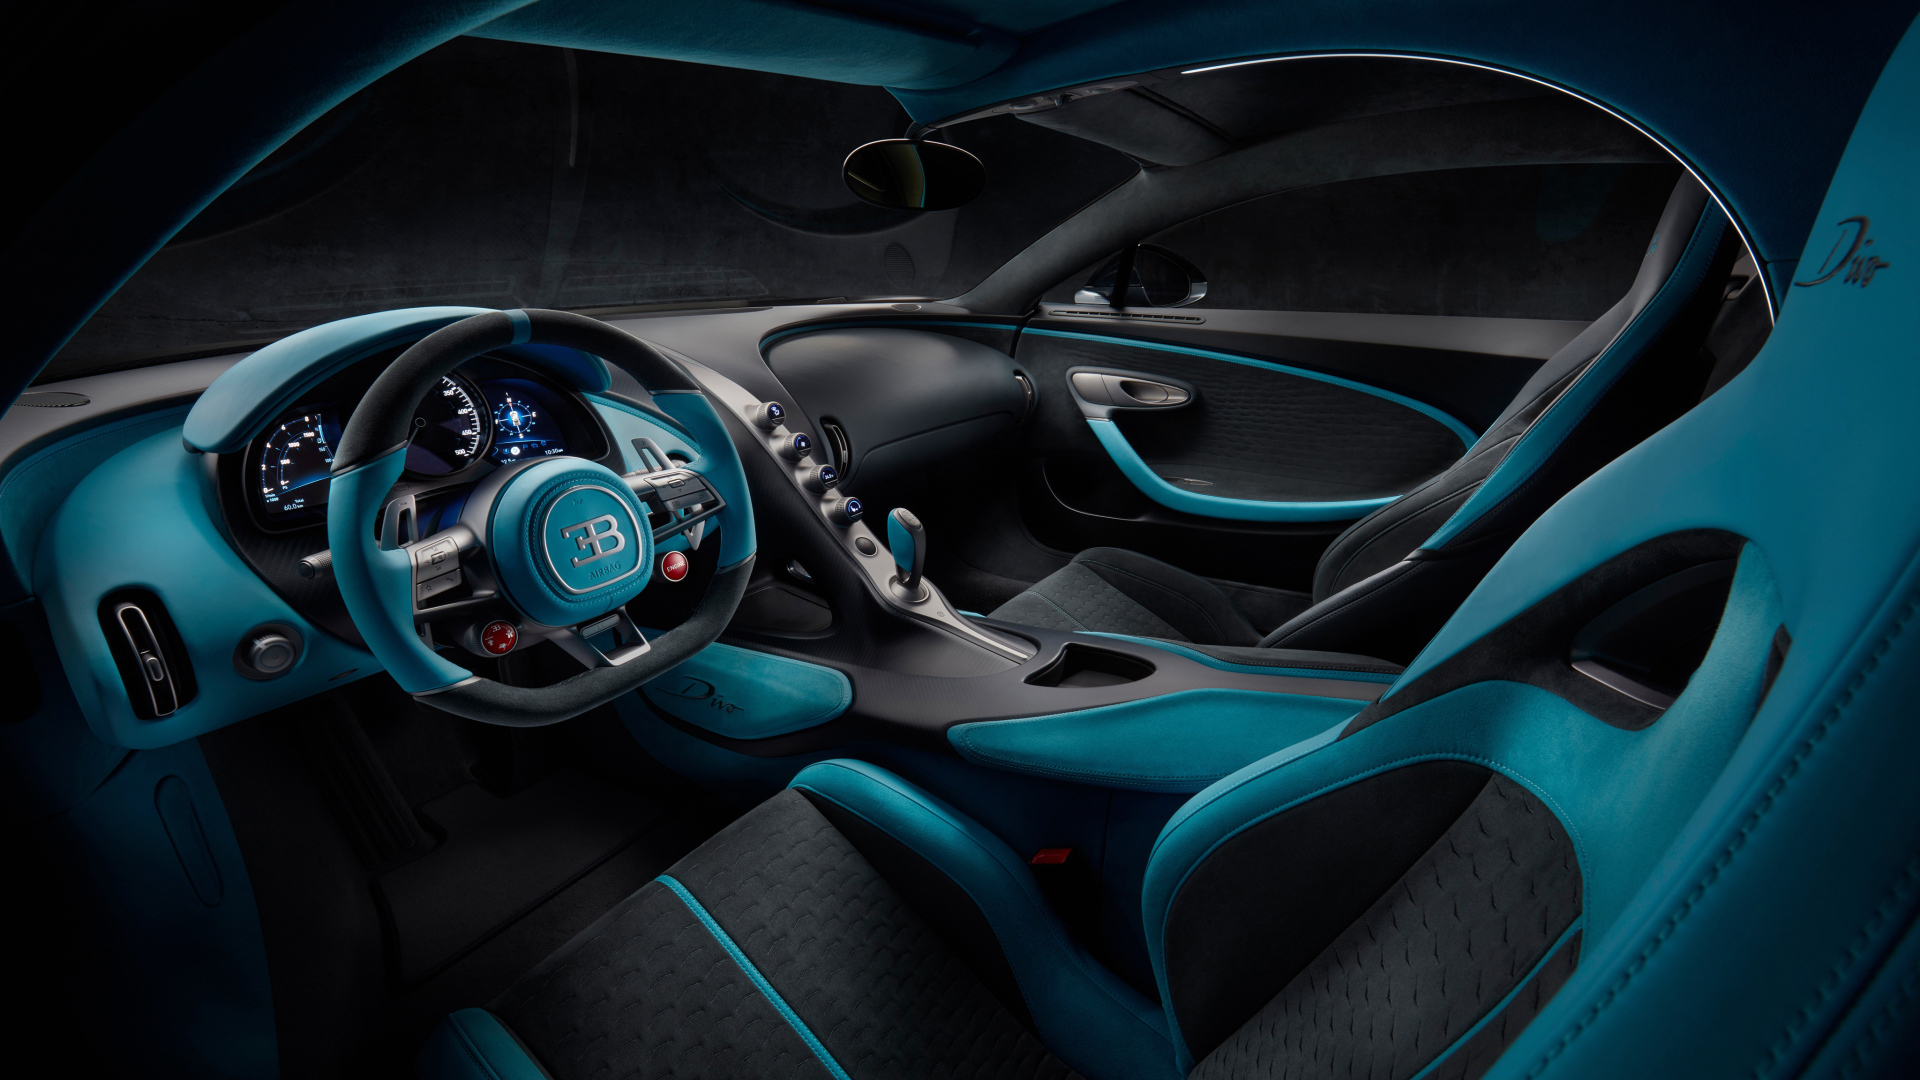 Кожаный салон автомобиля  Bugatti Divo, 2019 года